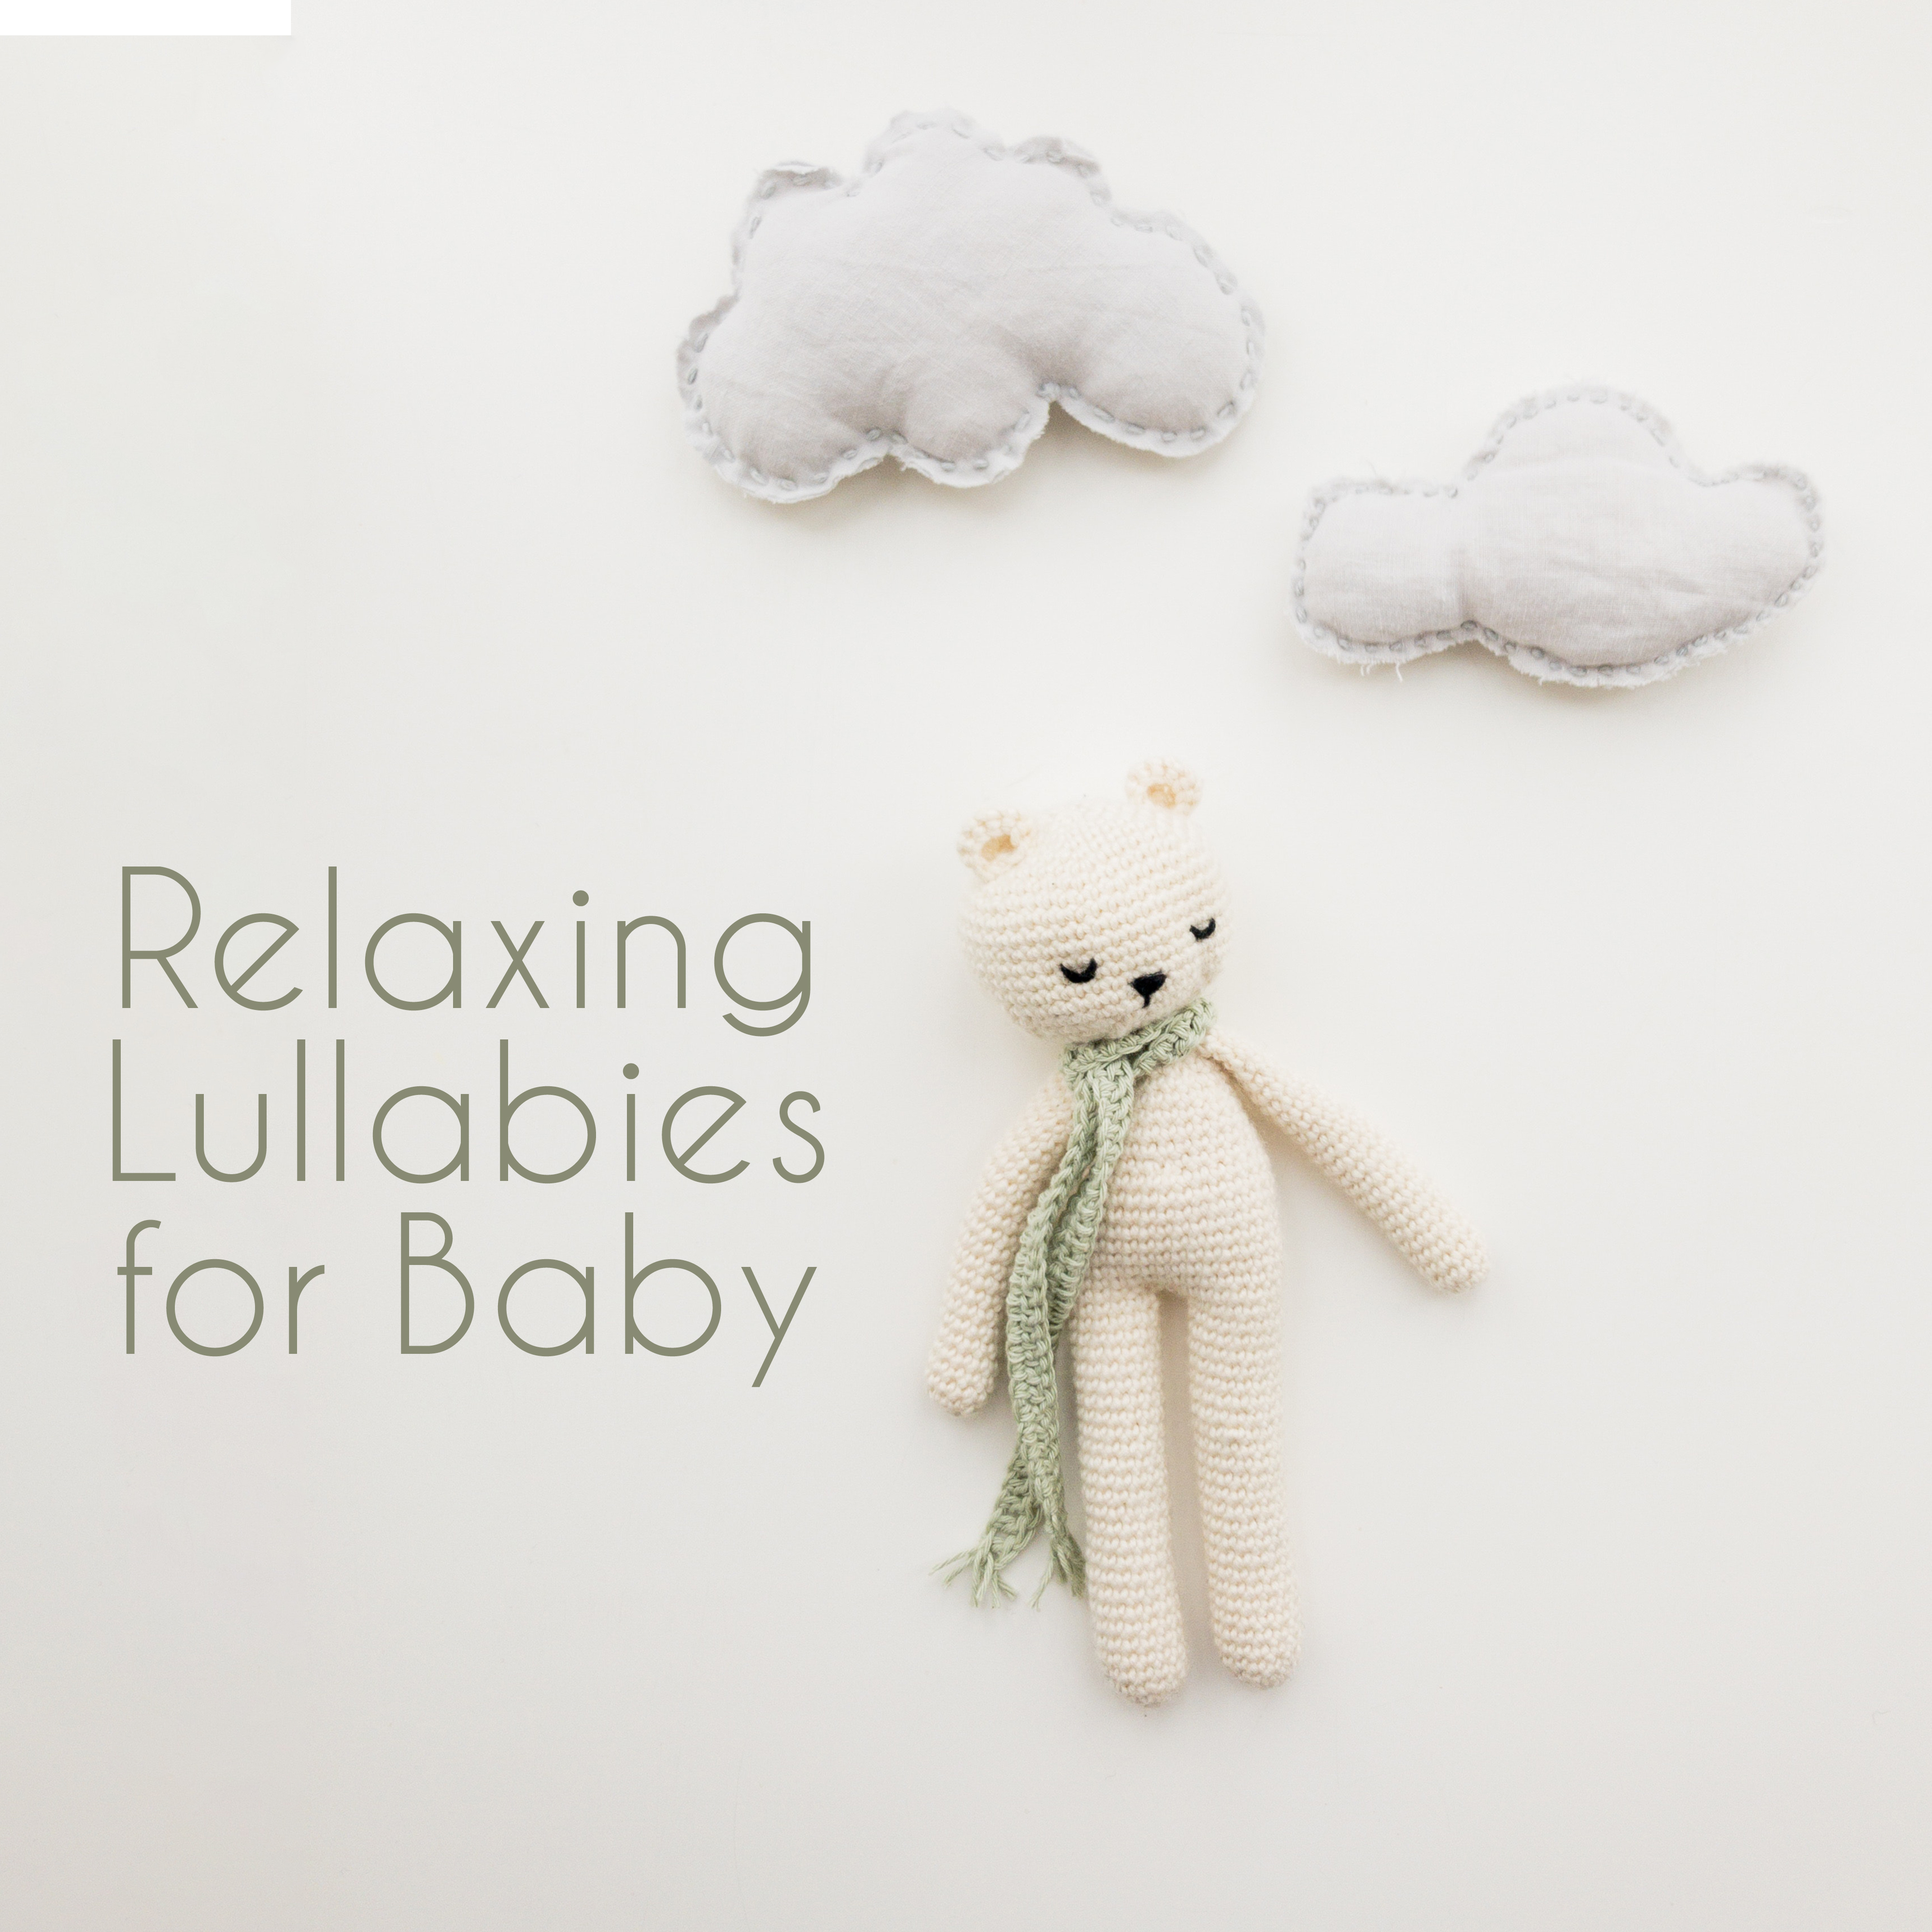 Relaxing Lullabies for Baby